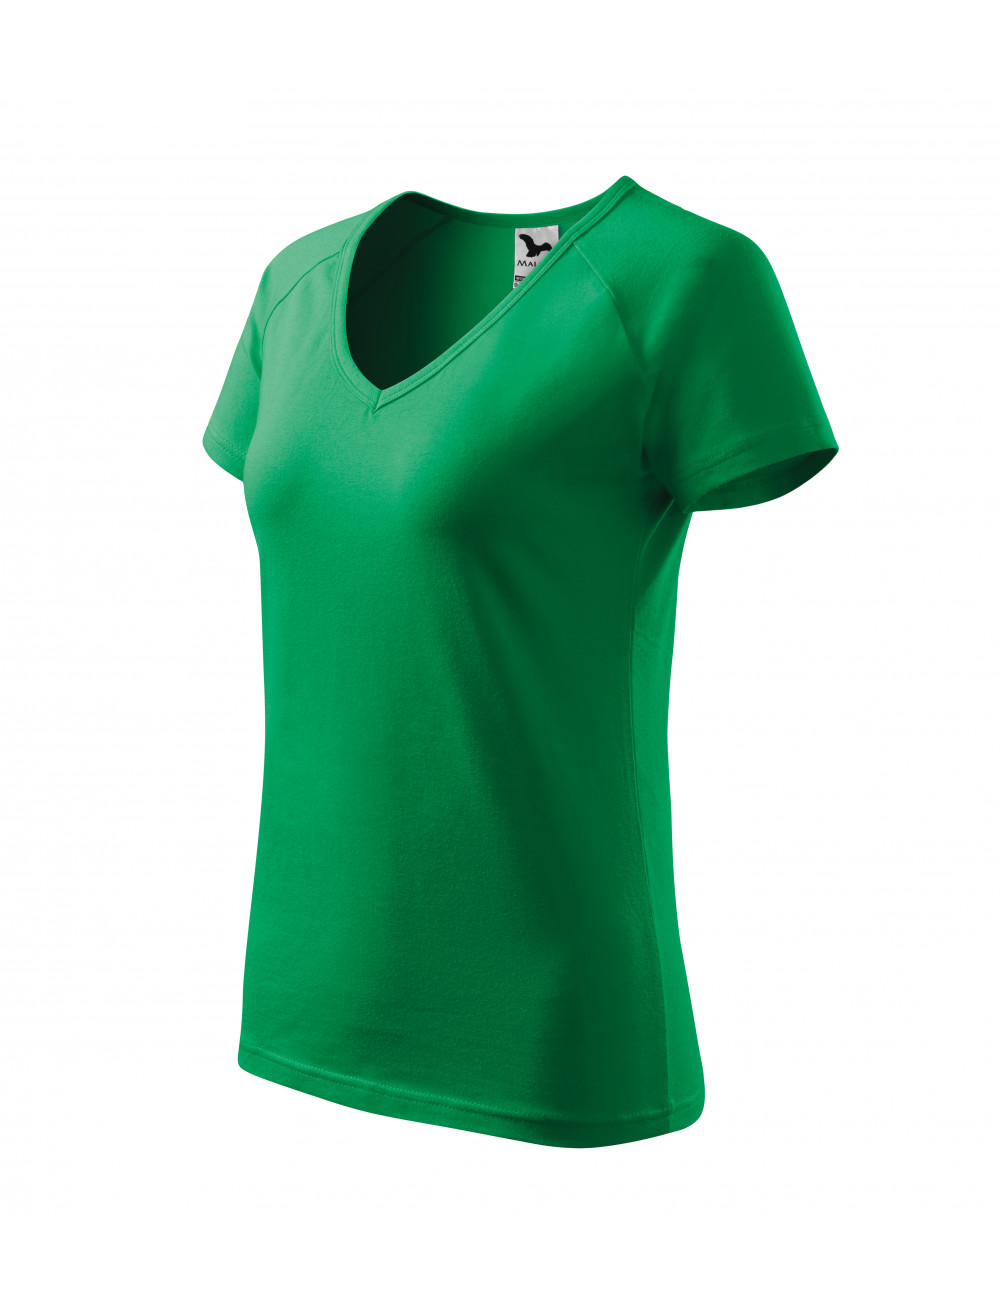 Women`s t-shirt dream 128 grass green Adler Malfini